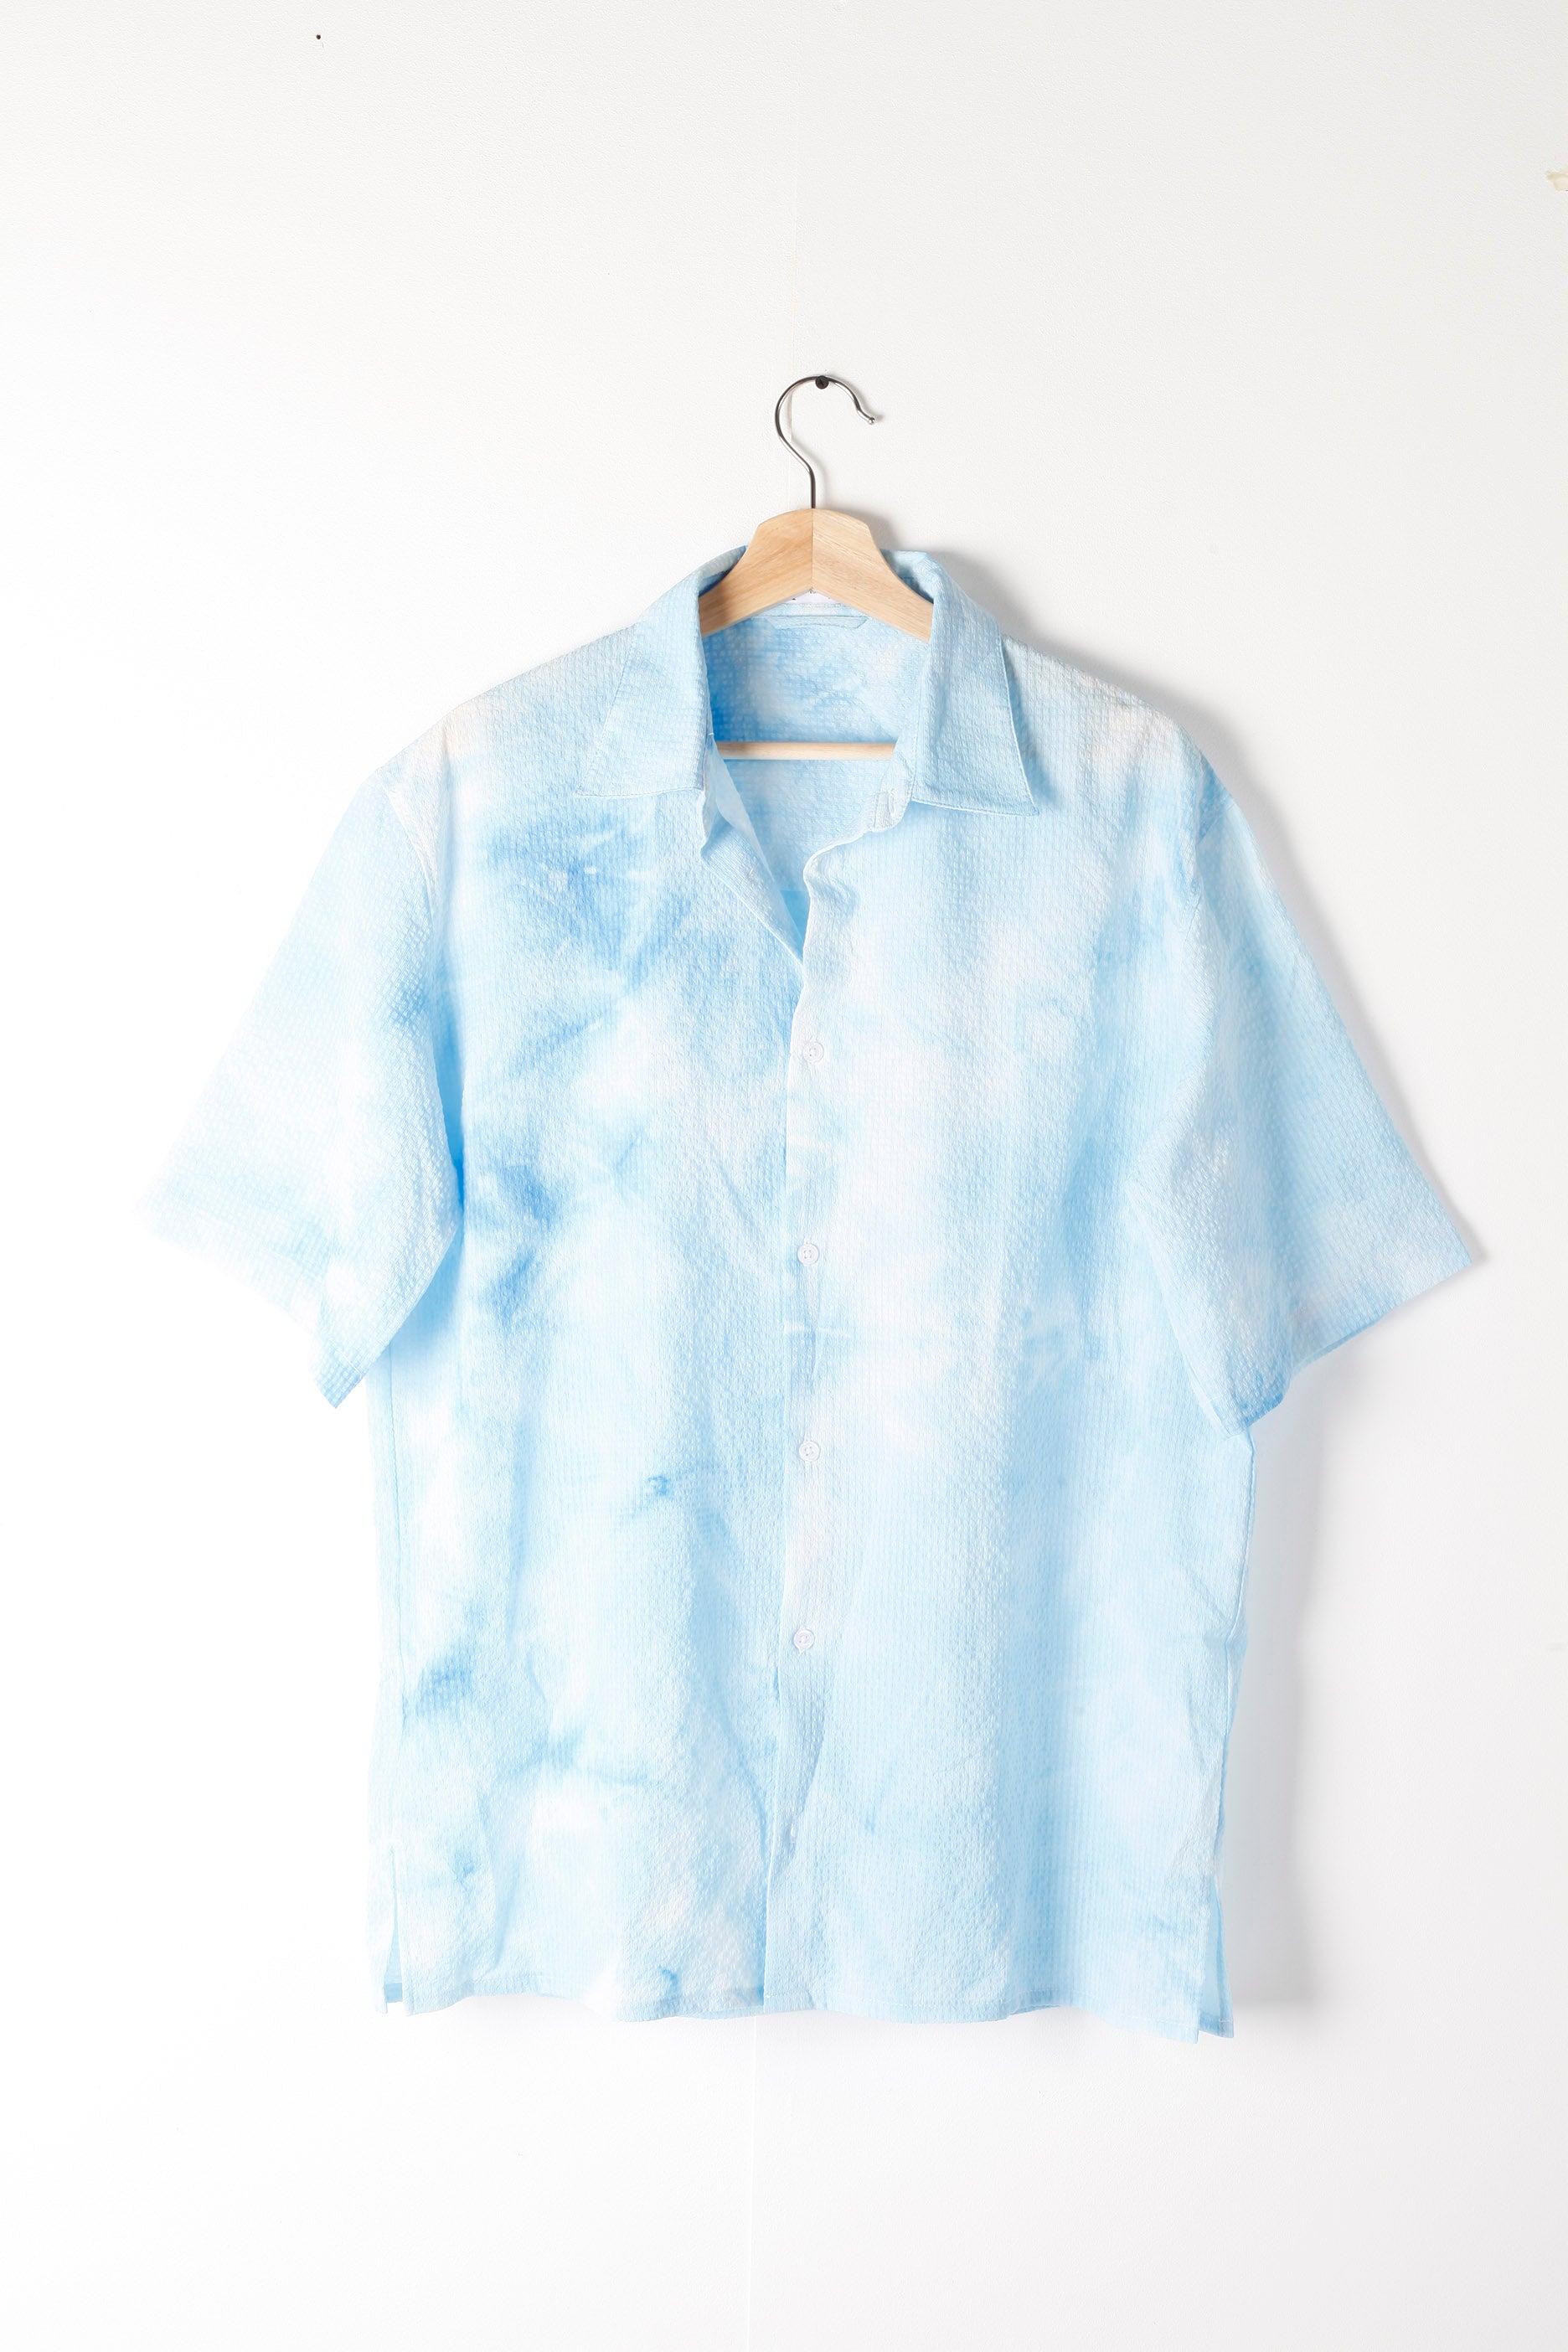 Tie Dye Blue Shirt (Medium)